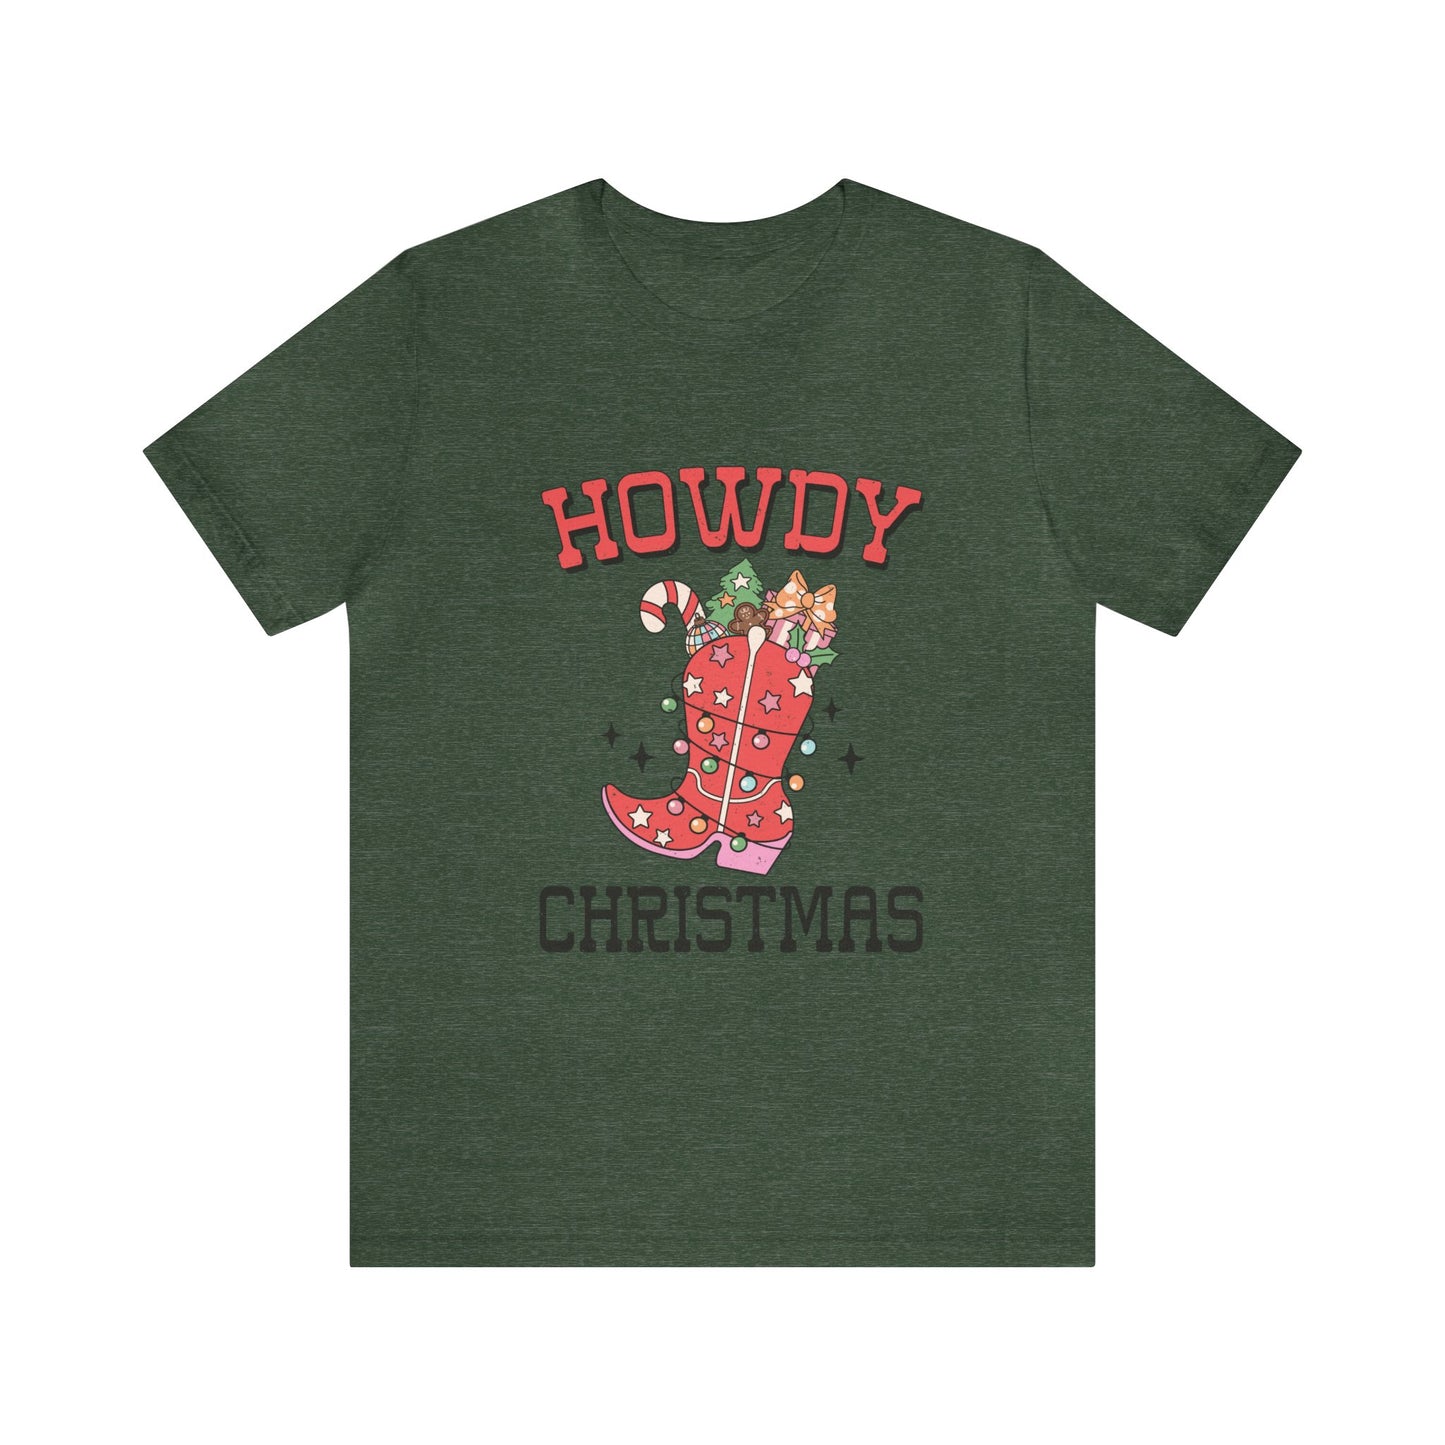 Howdy Christmas Women's Short Sleeve Christmas T Shirt